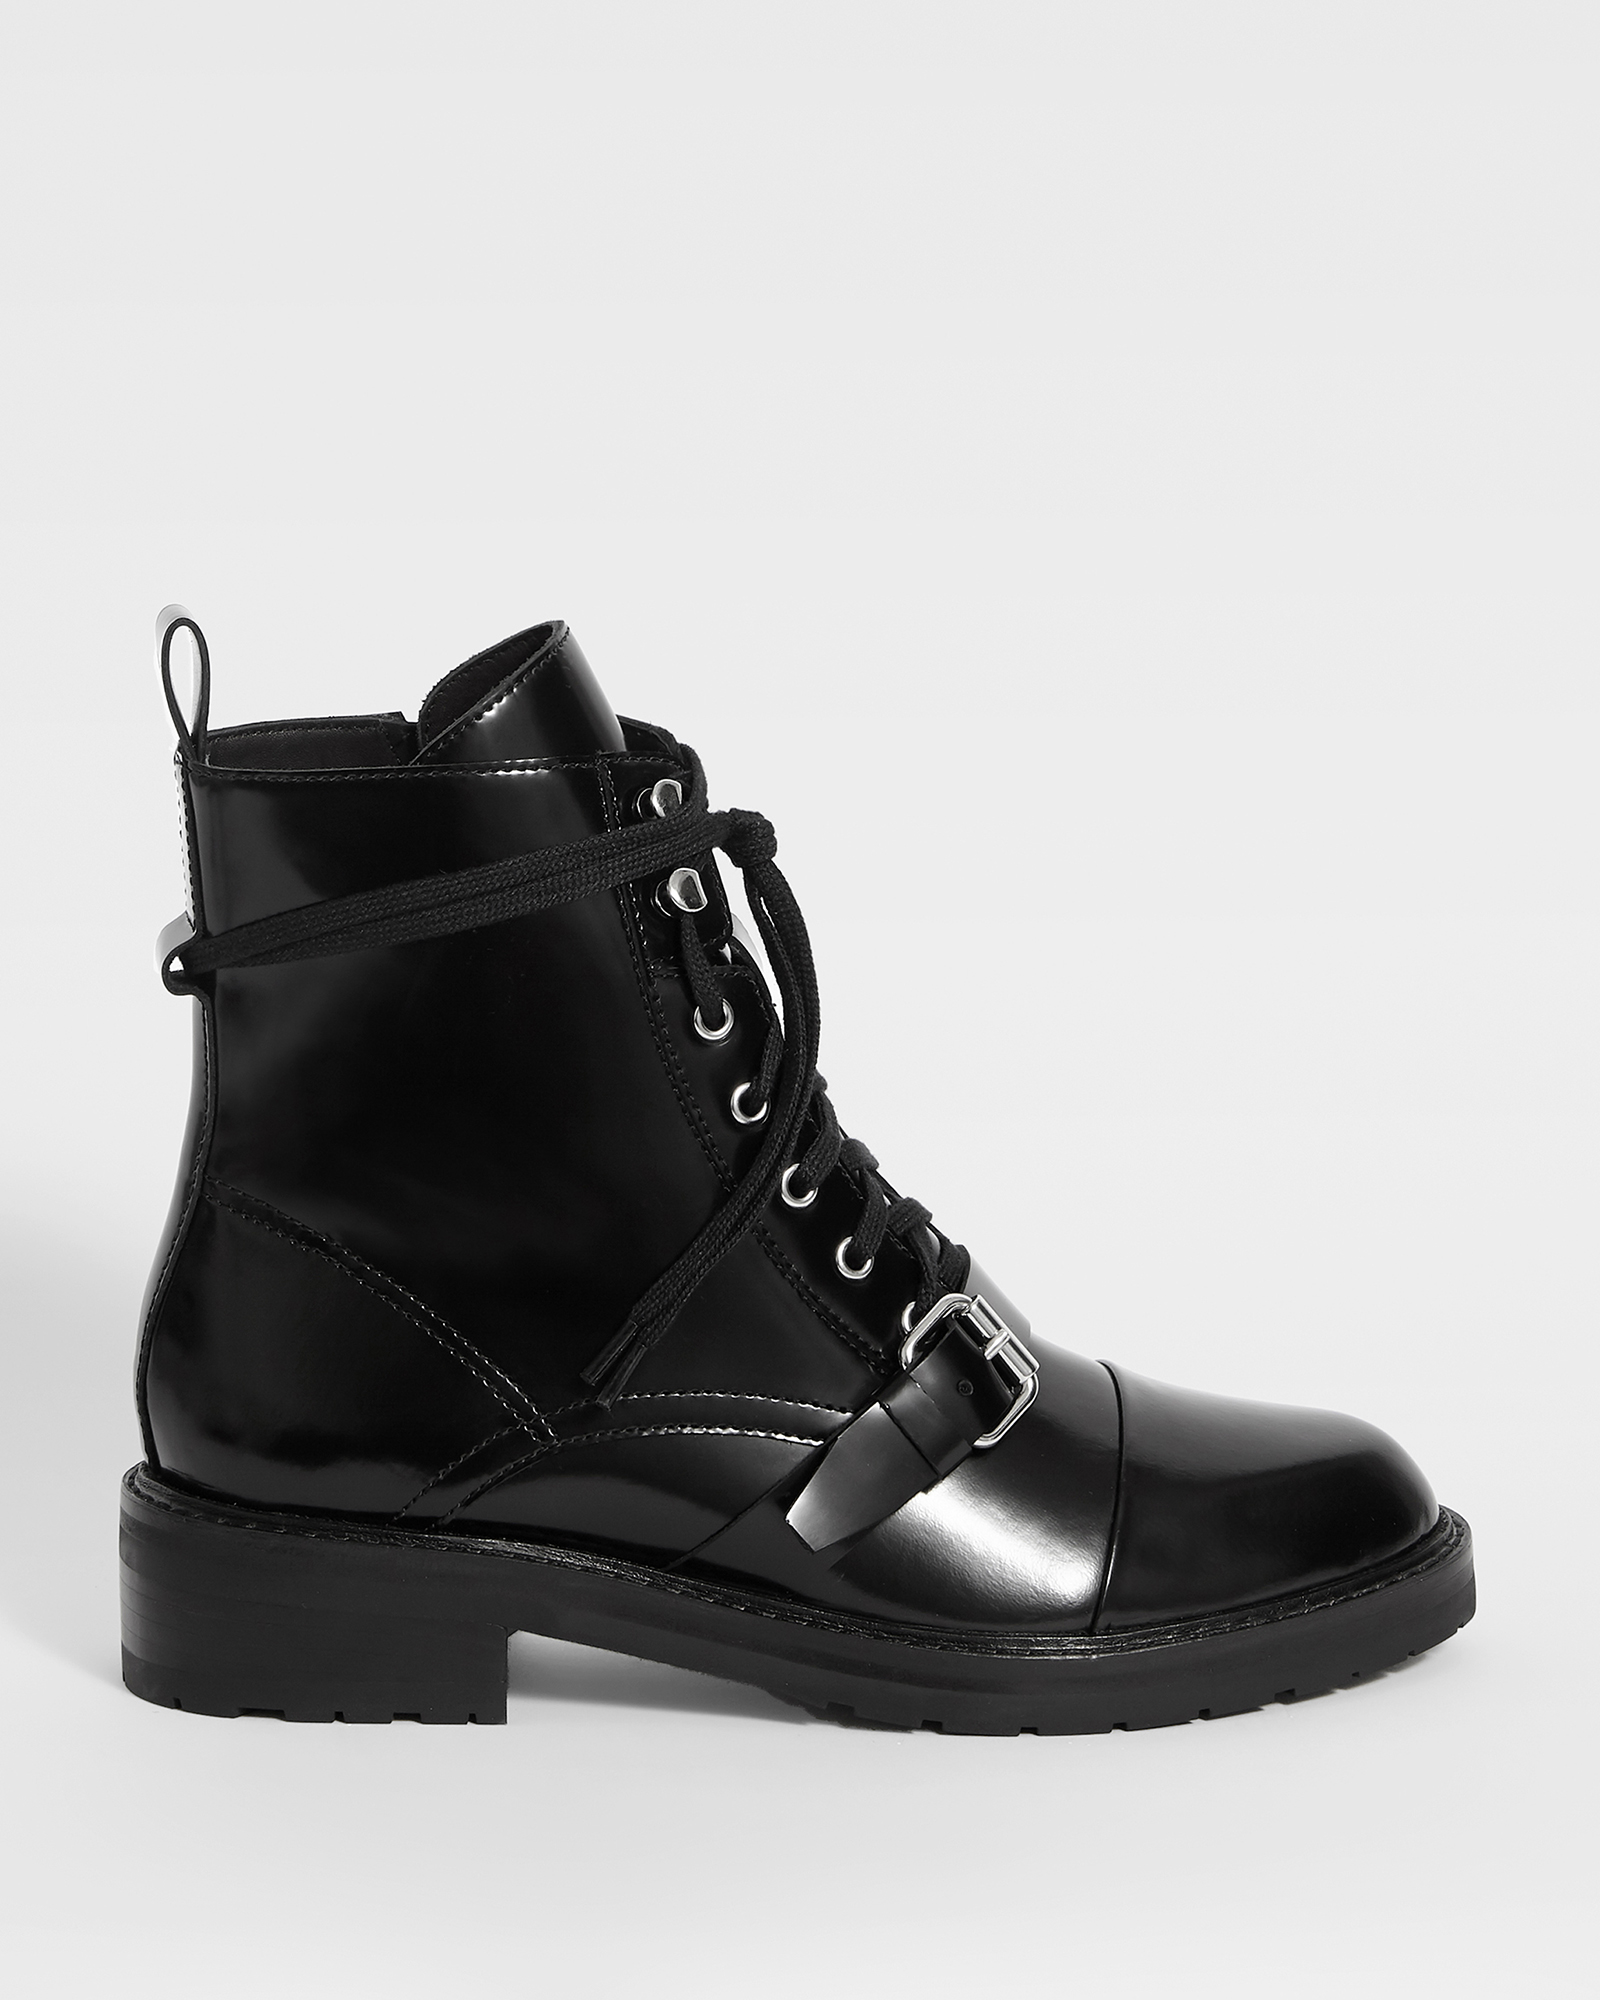 AllSaints Women's Donita Leather Ankle Boots, Black, Size: UK 3/US 5/EU 36